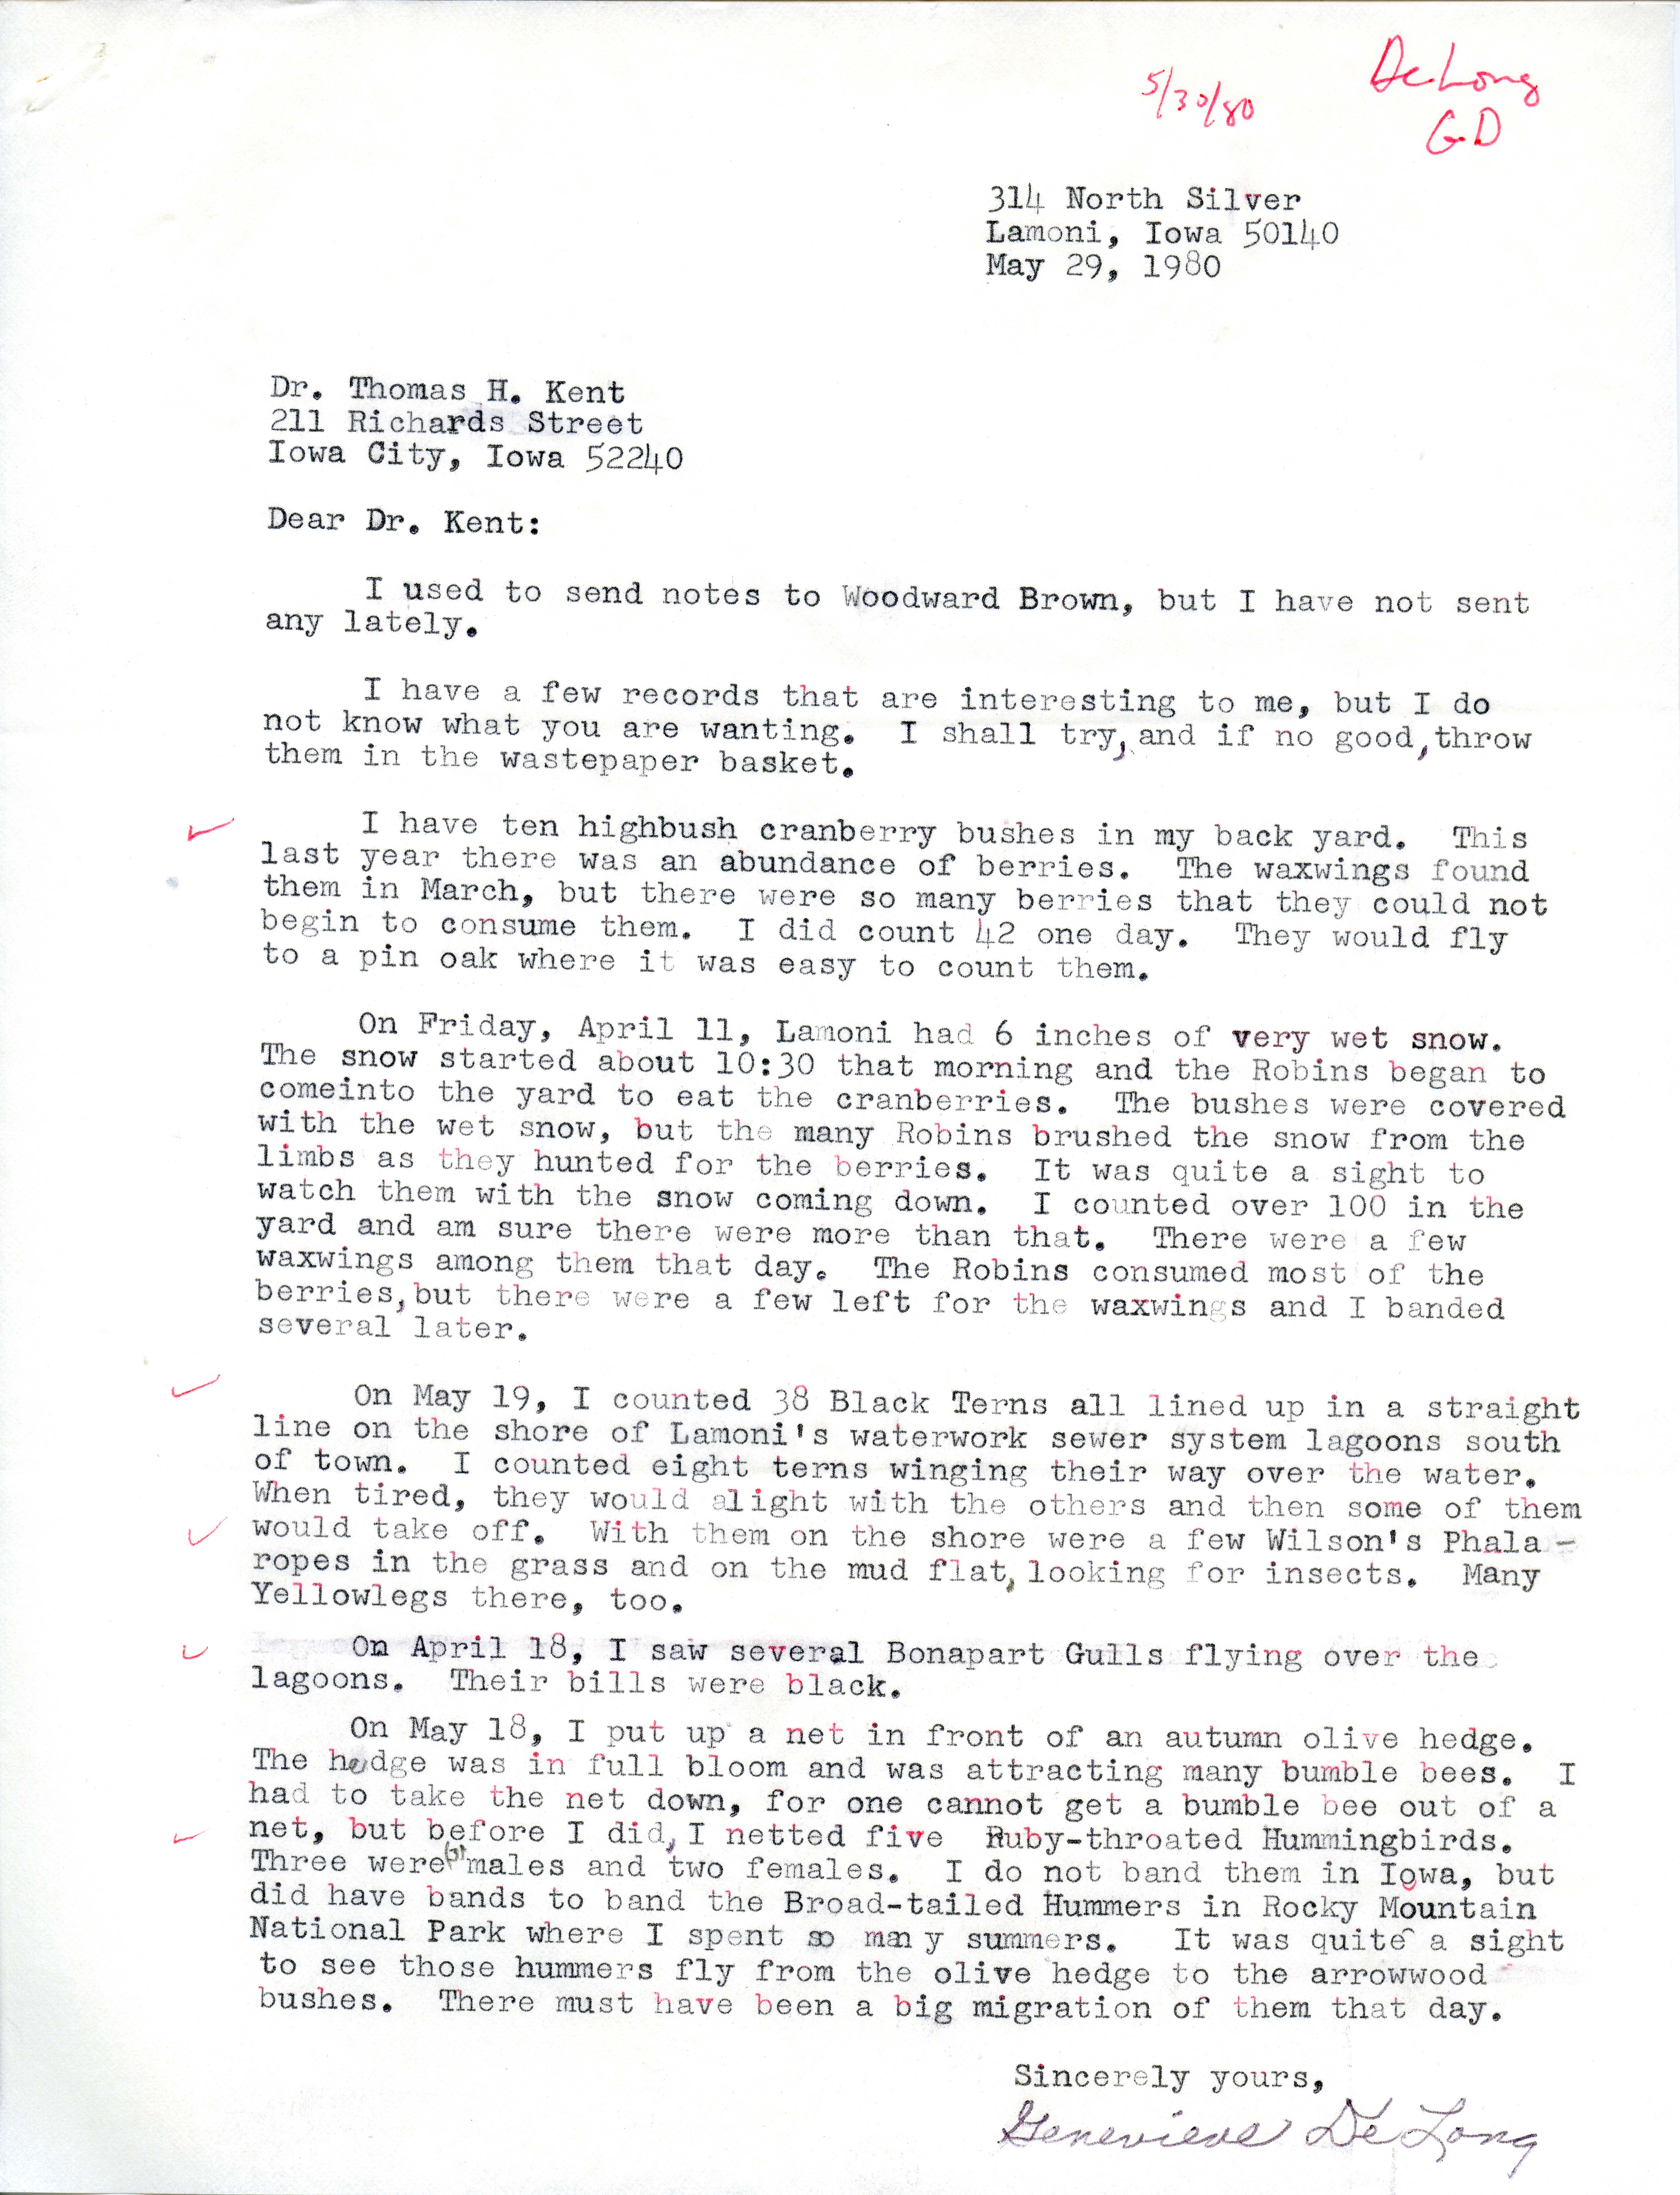 Genevieve DeLong letter to Thomas H. Kent regarding bird sightings, May 29, 1980